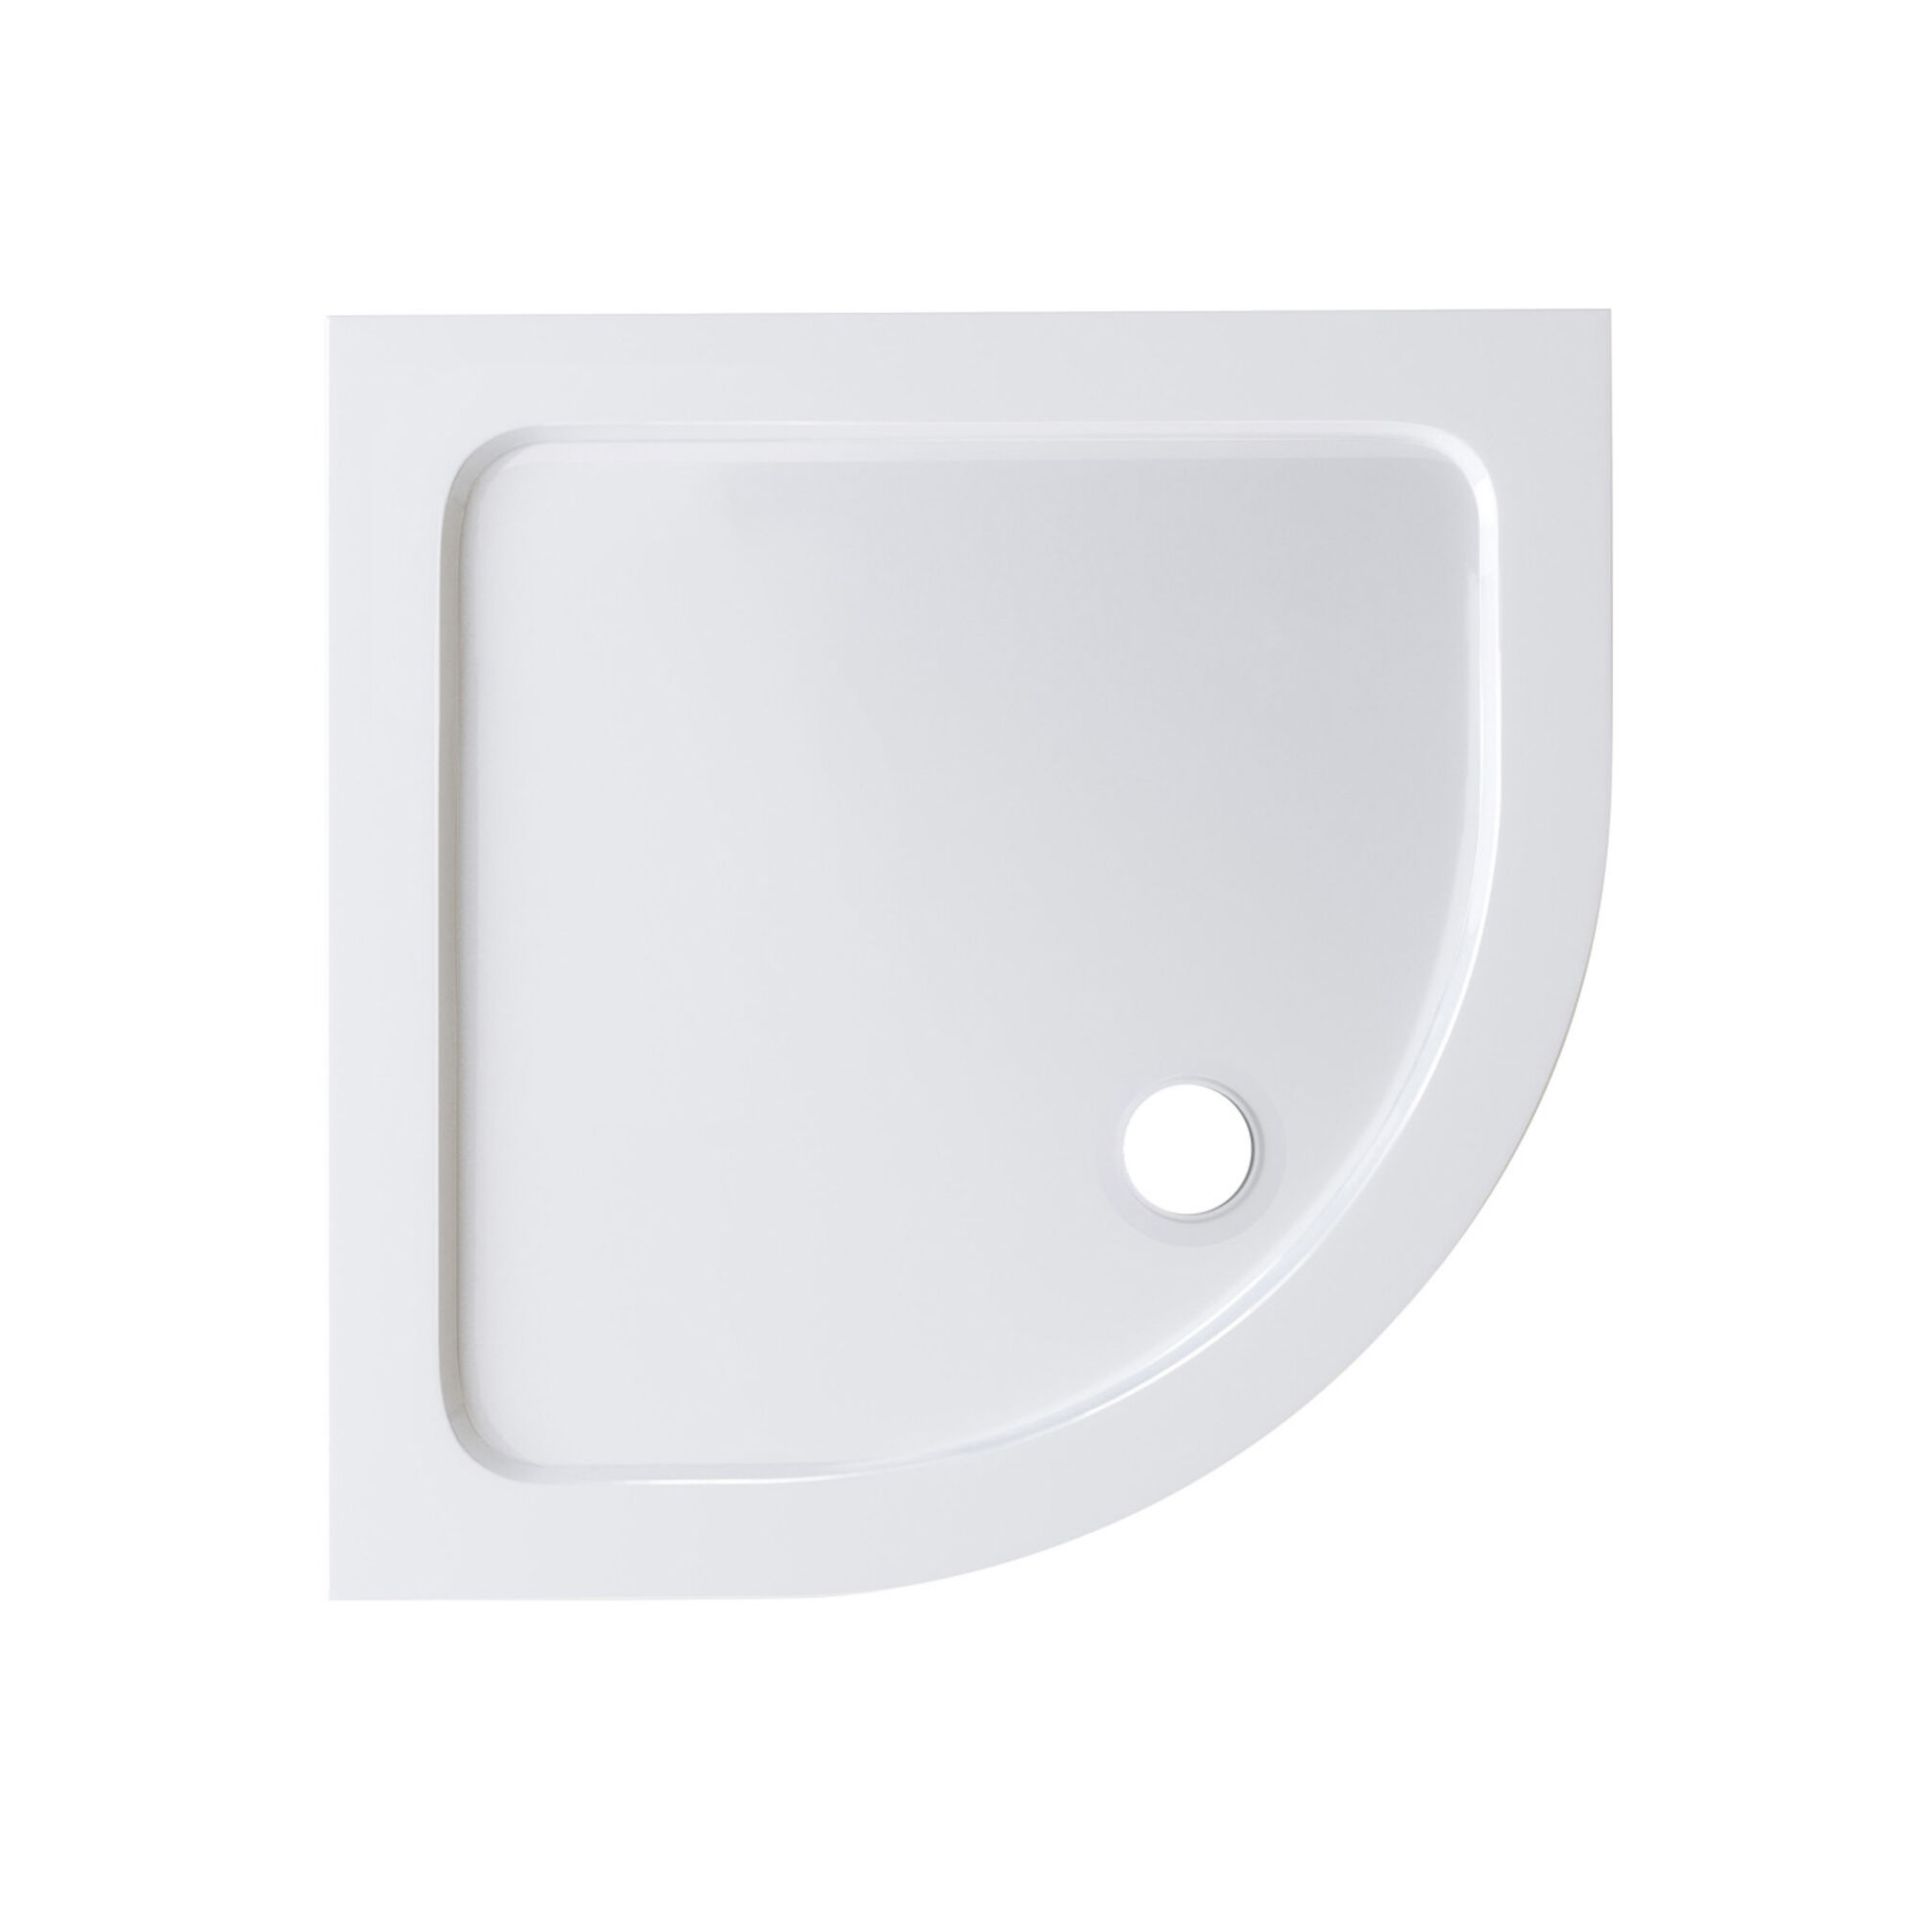 (TP85) 1000x1000mm Quadrant Ultra Slim Stone Shower Tray. Low profile ultra slim design Gel coated